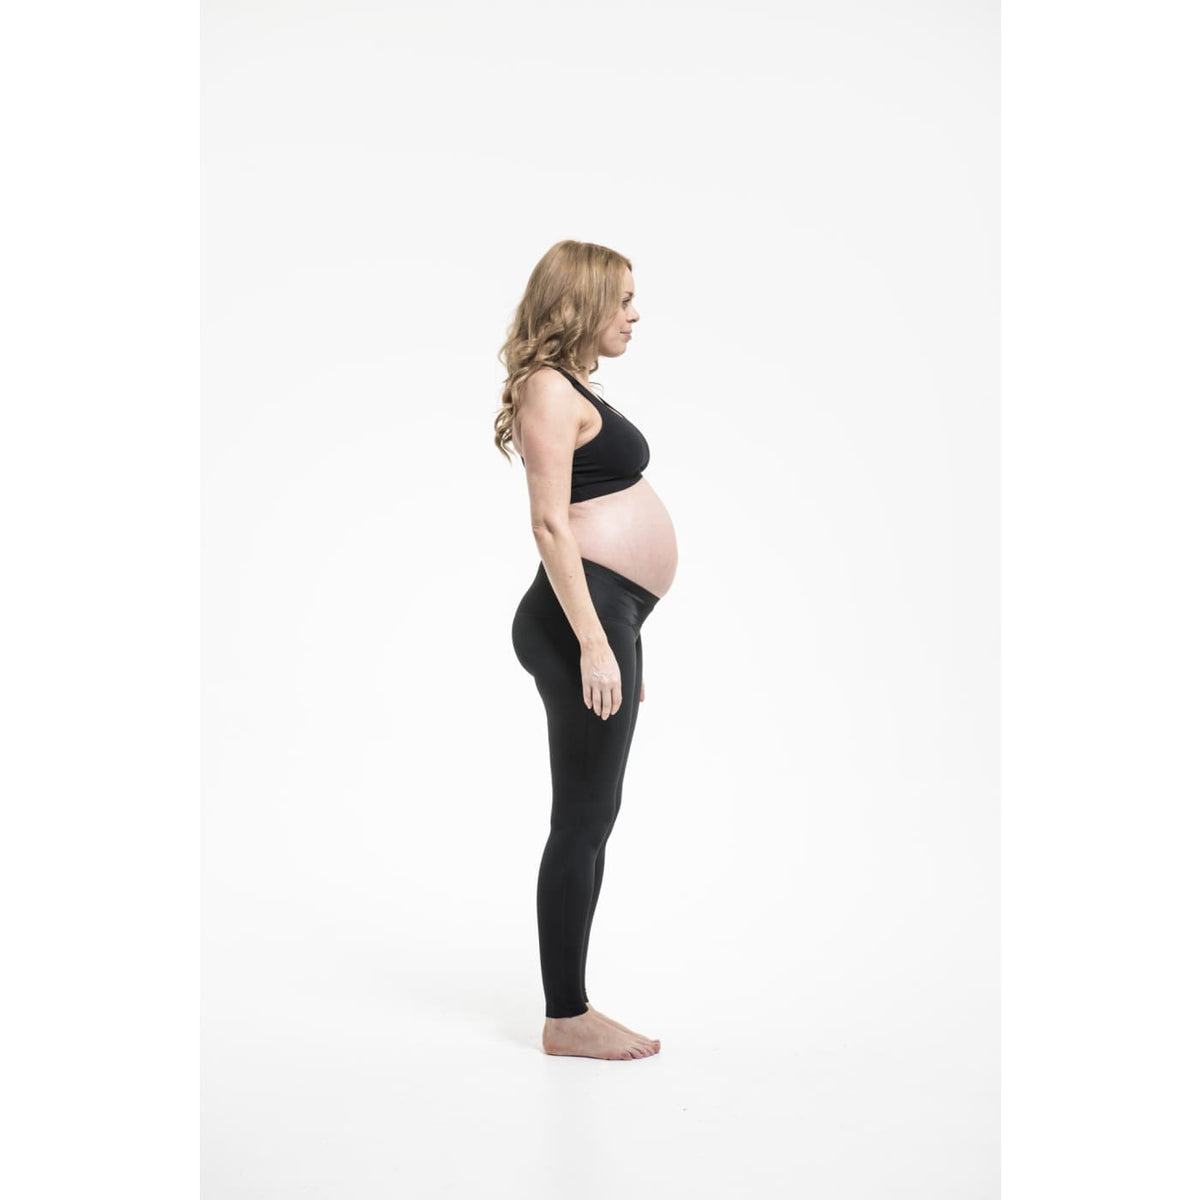 SRC Pregnancy Leggings - Black XXL - XXL / Black - FOR MUM - MATERNITY SUPPORT GARMENTS (PRE/POST)